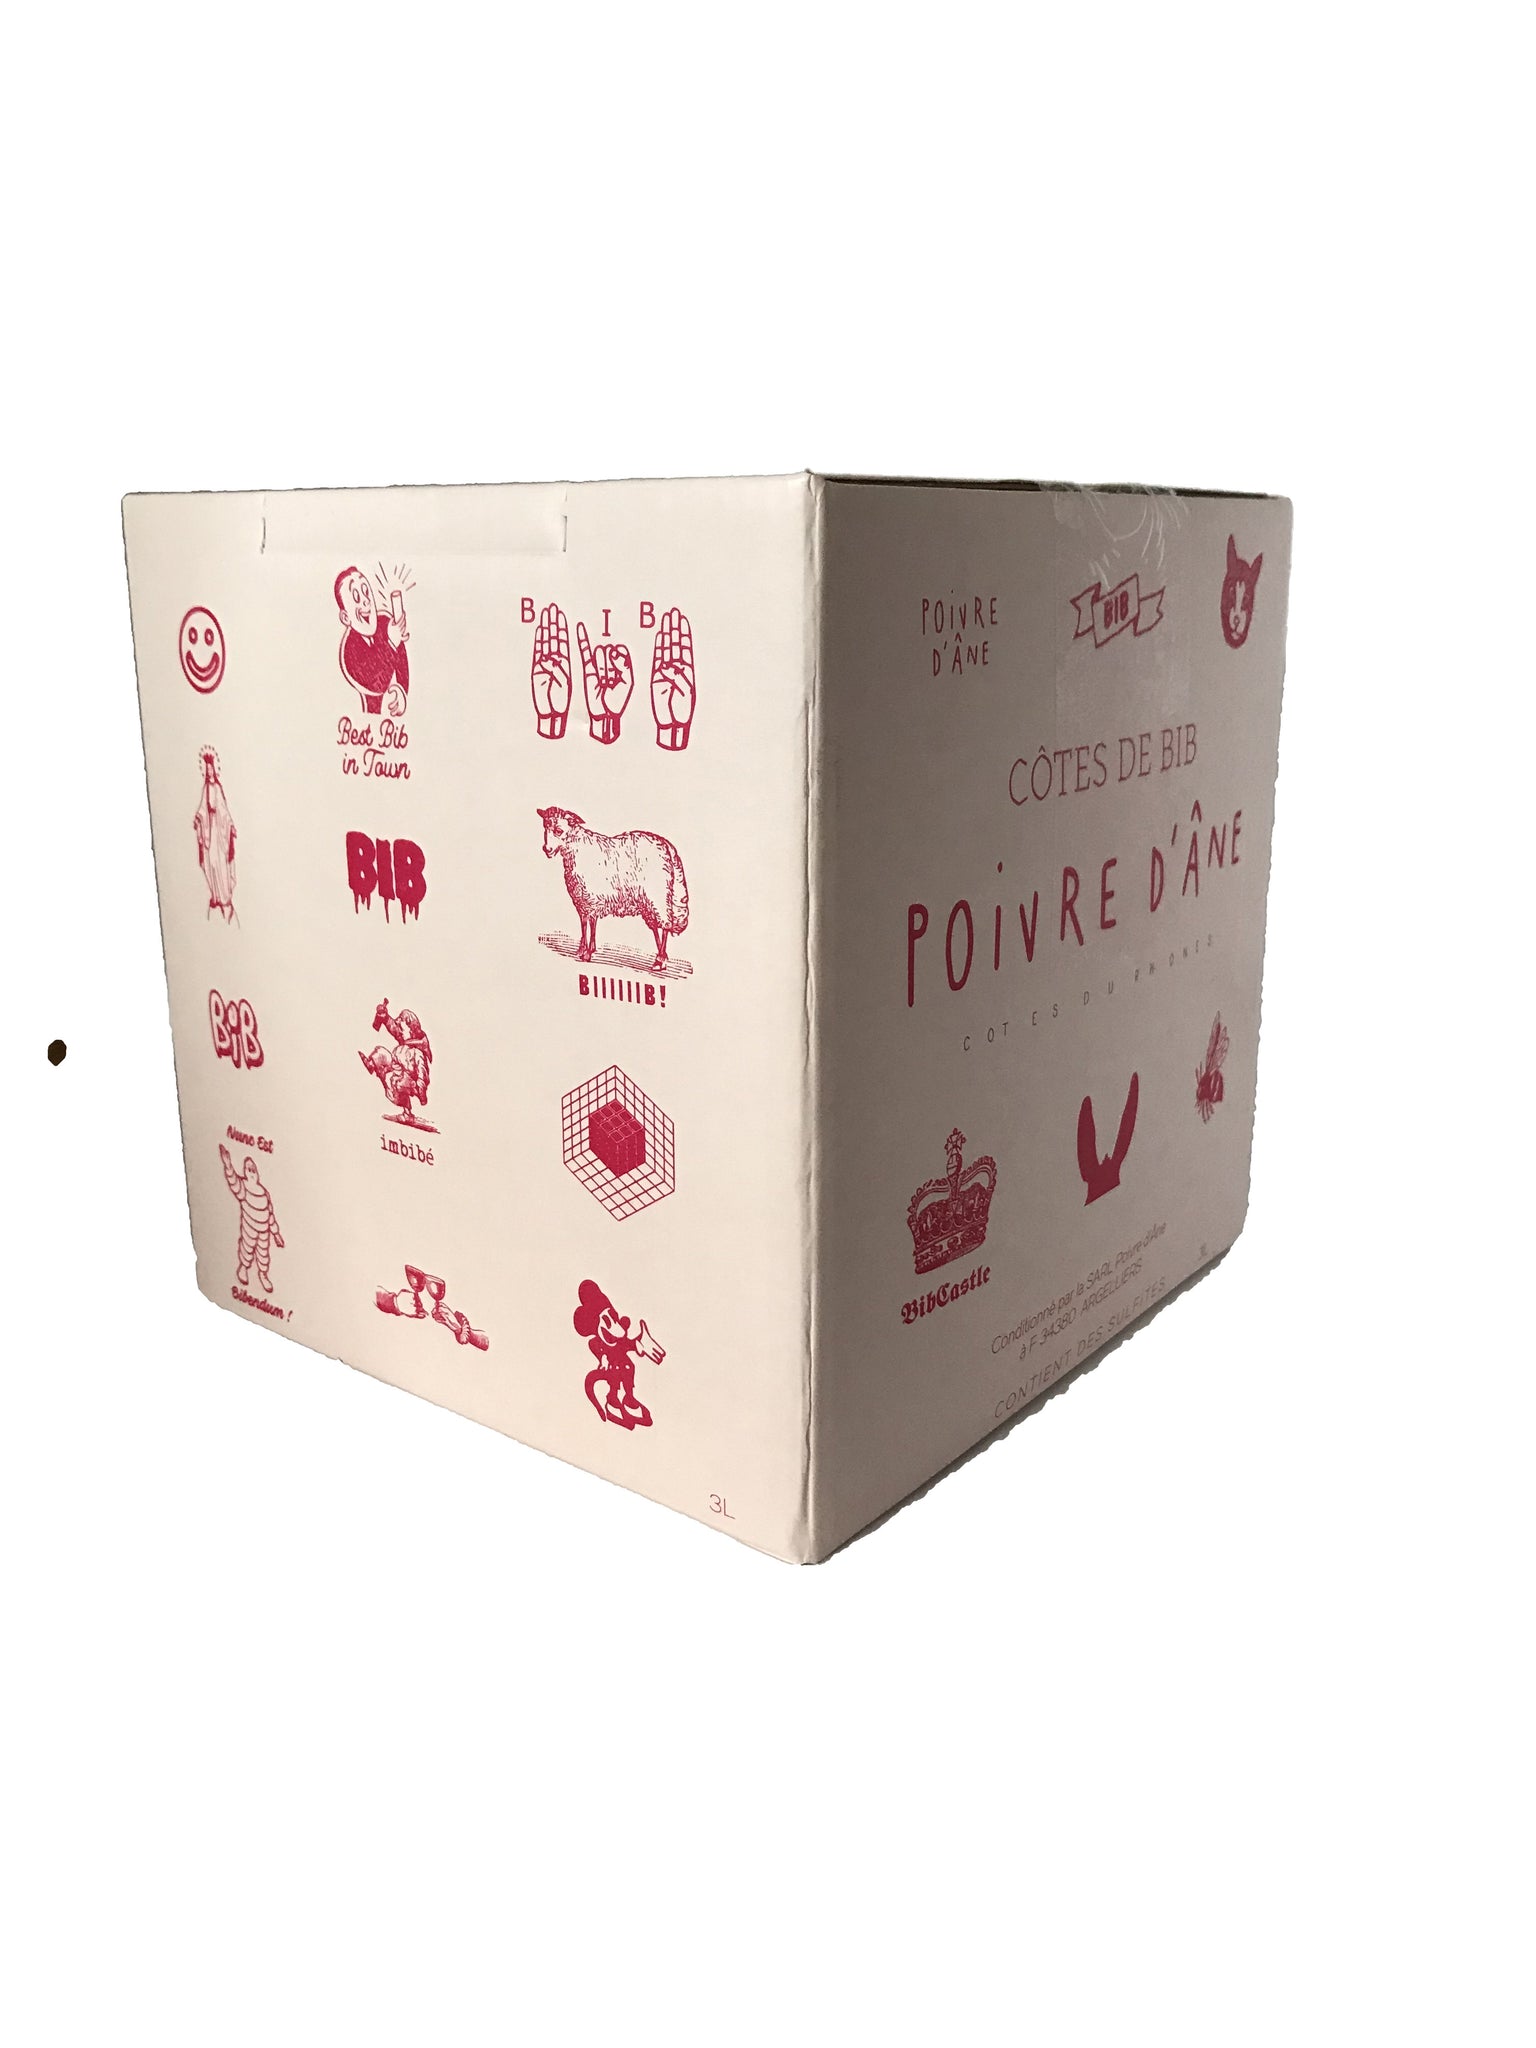 Poivre d'Ane, CDR Rouge 2019 3L Bag In Box